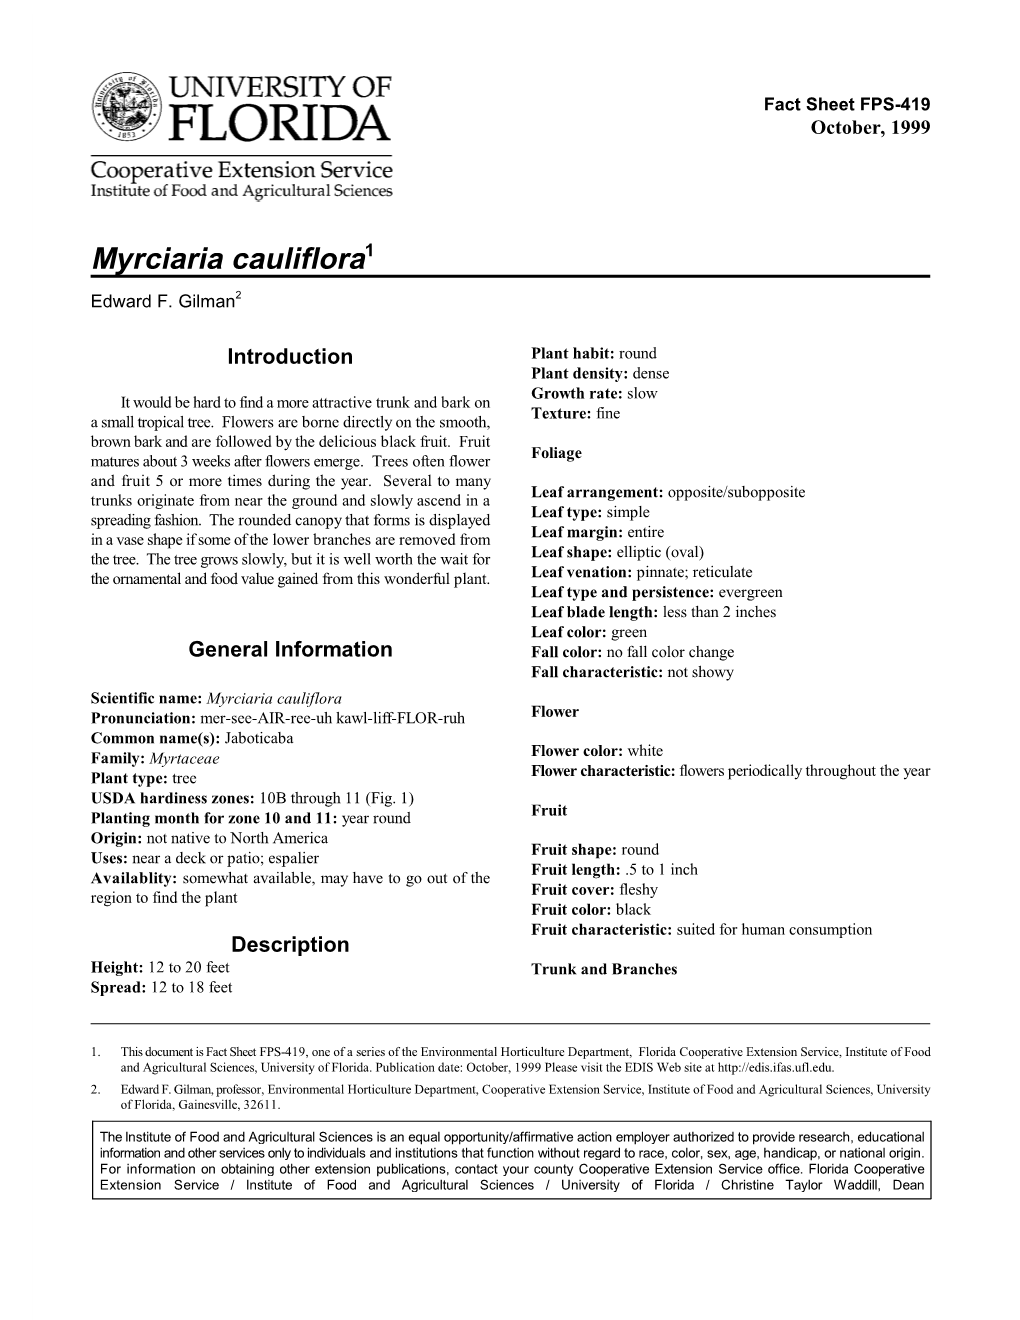 Myrciaria Cauliflora1